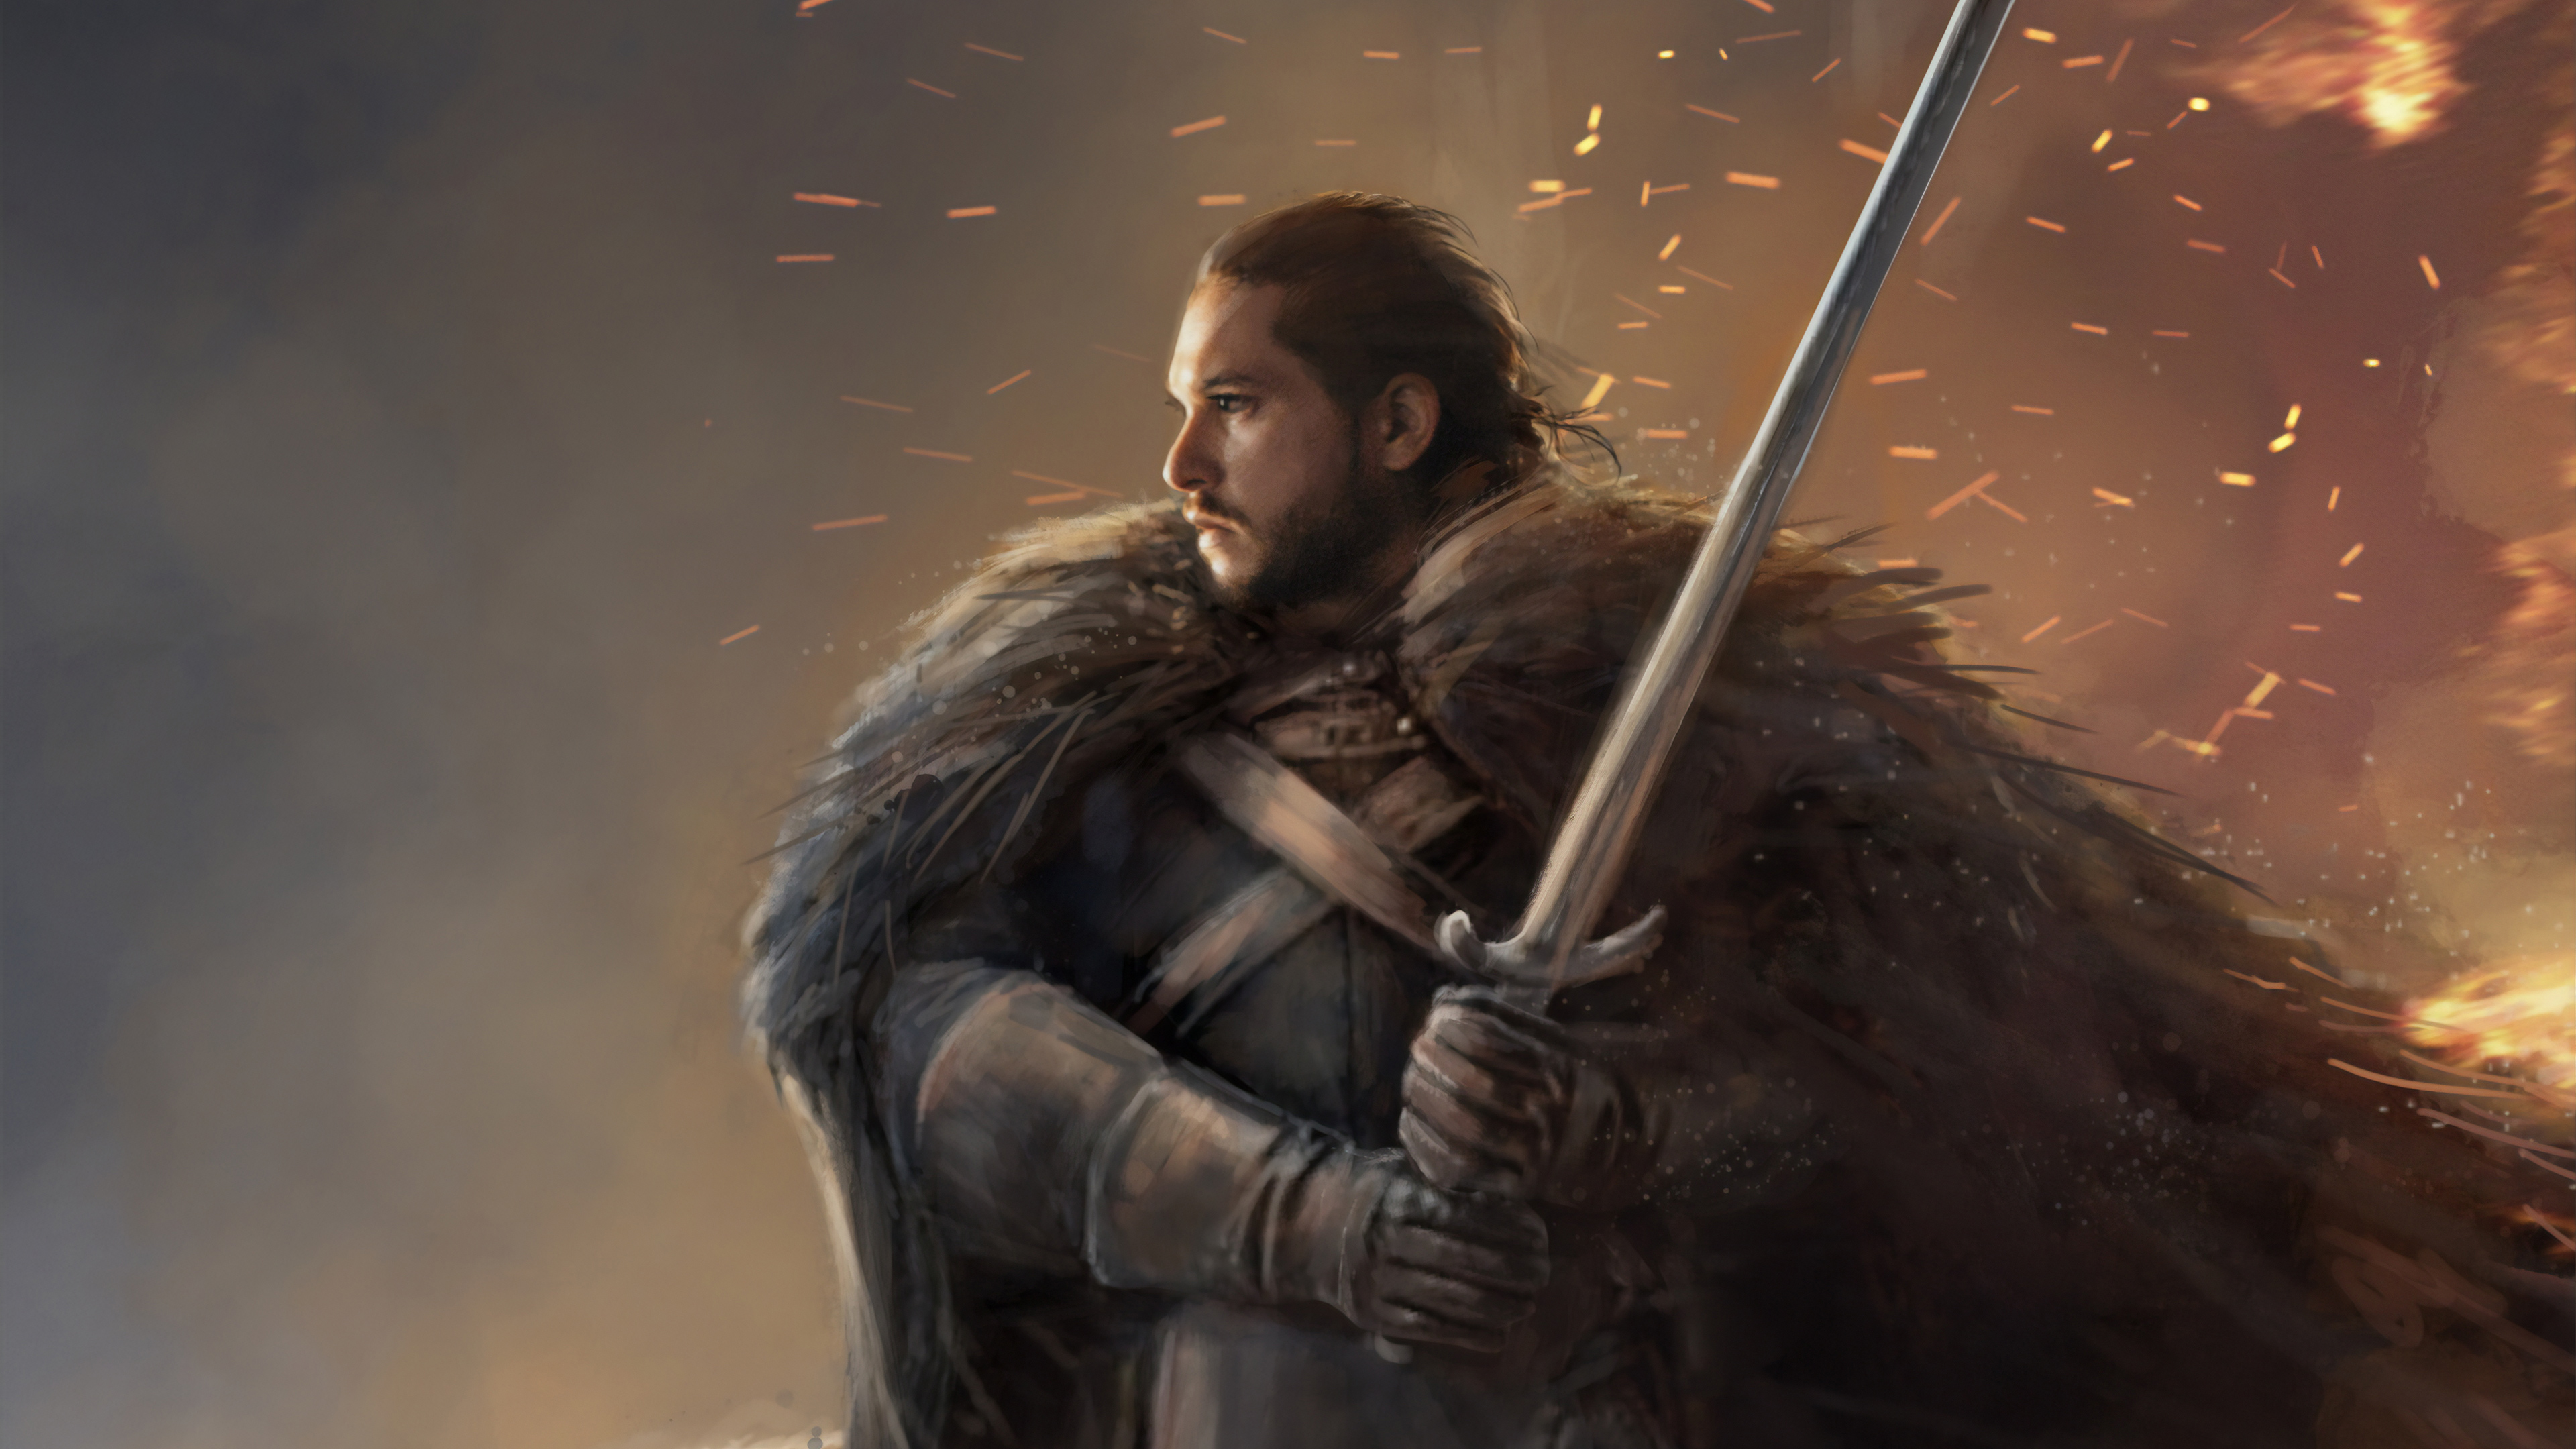 Download Game Of Thrones Season 8 Wallpaper